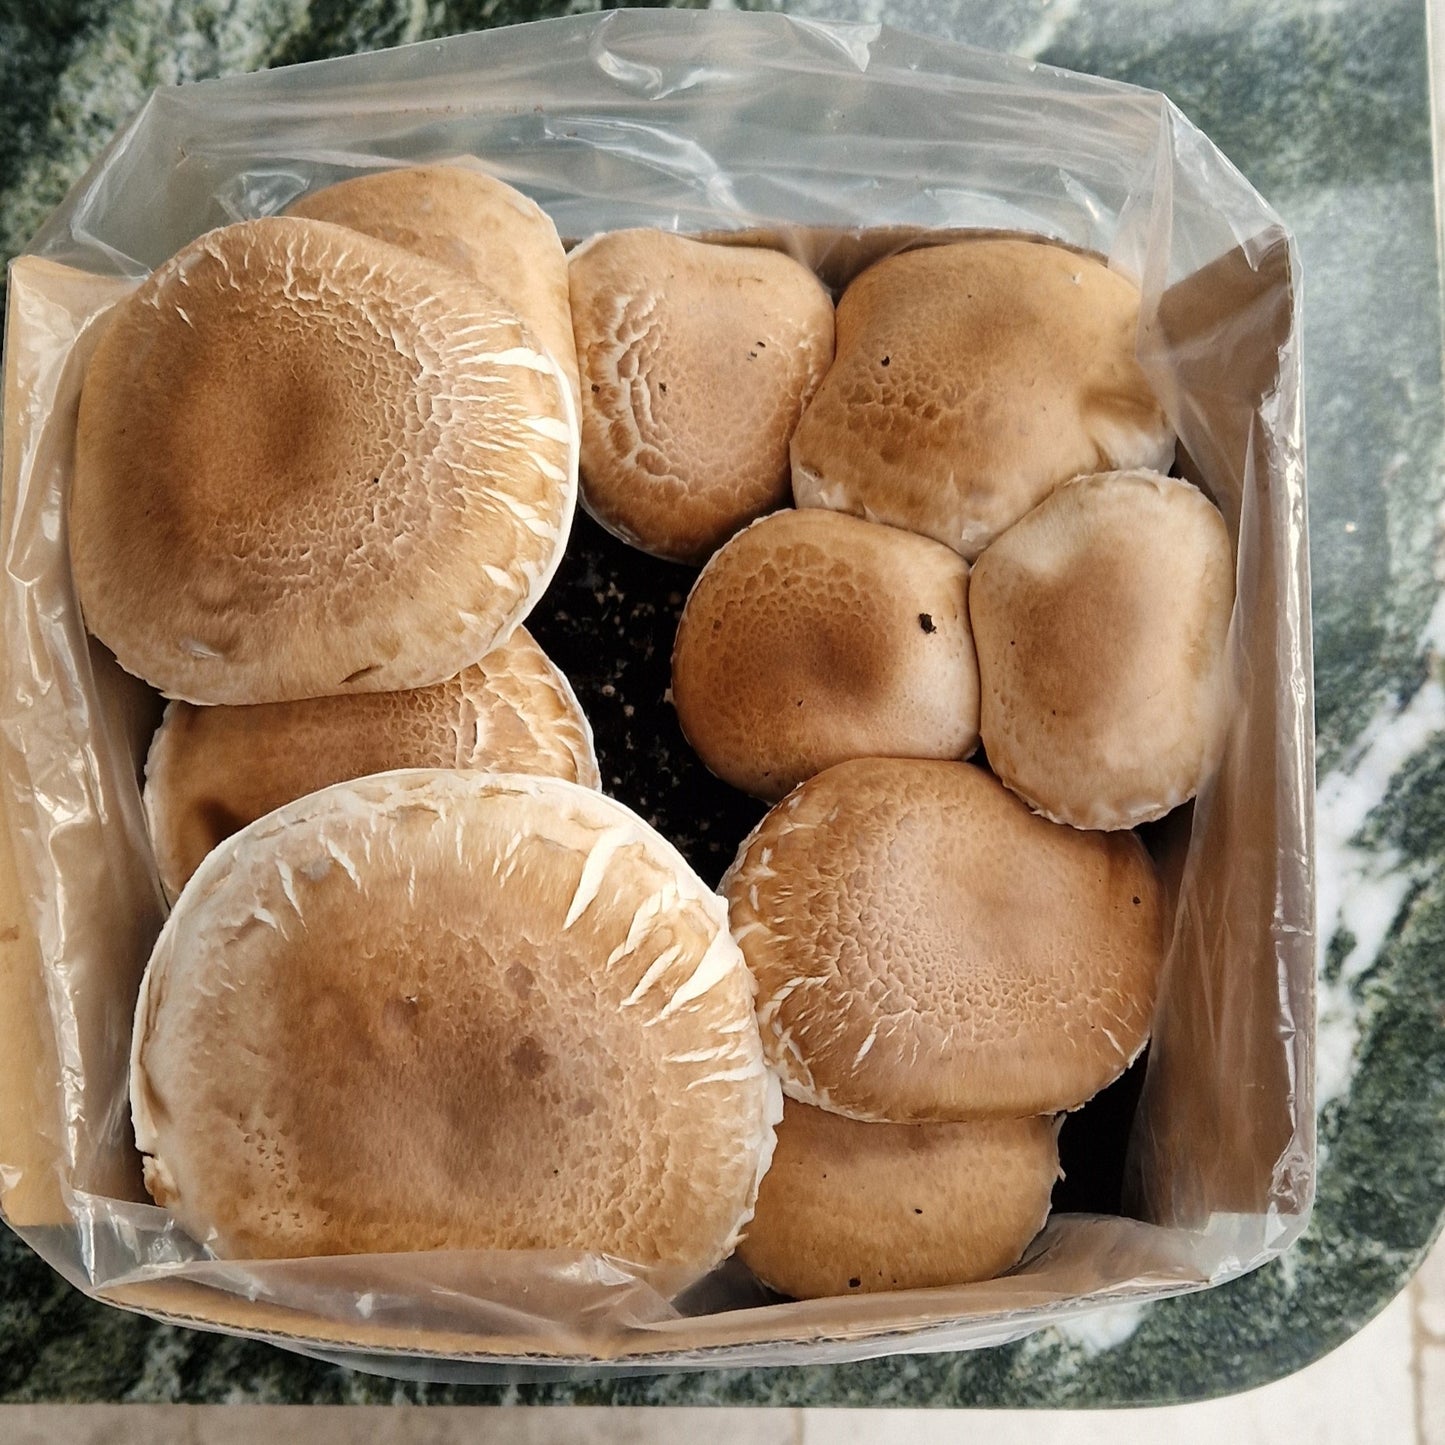 Chestnut Mushroom Growing Kit by Merryhill